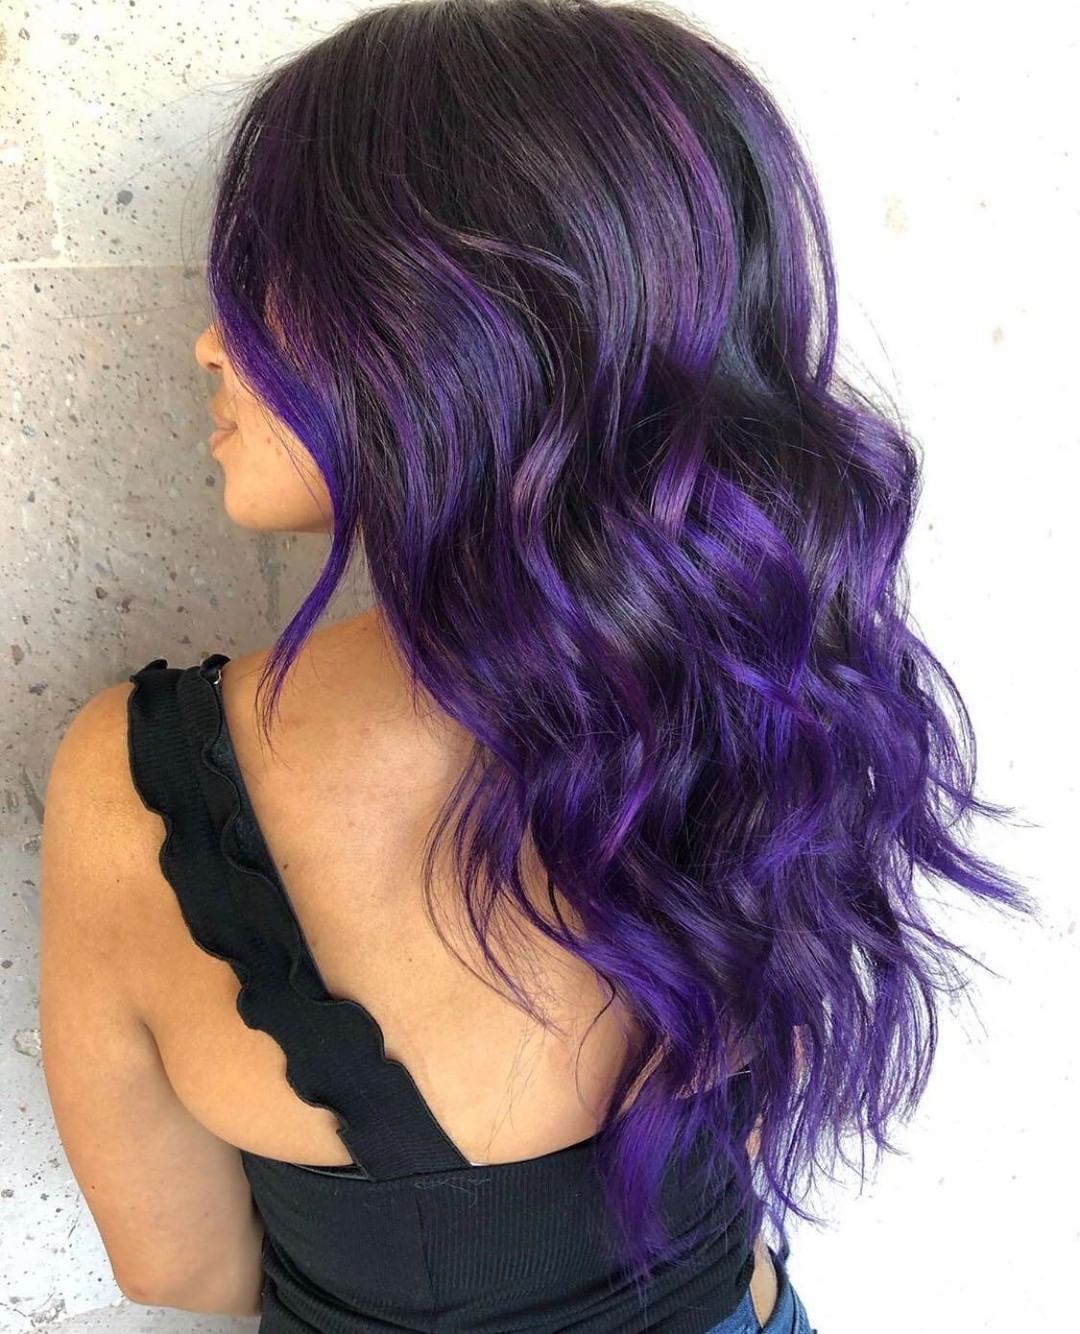 peinado púrpura oscuro dimensional con capas que enmarcan la cara